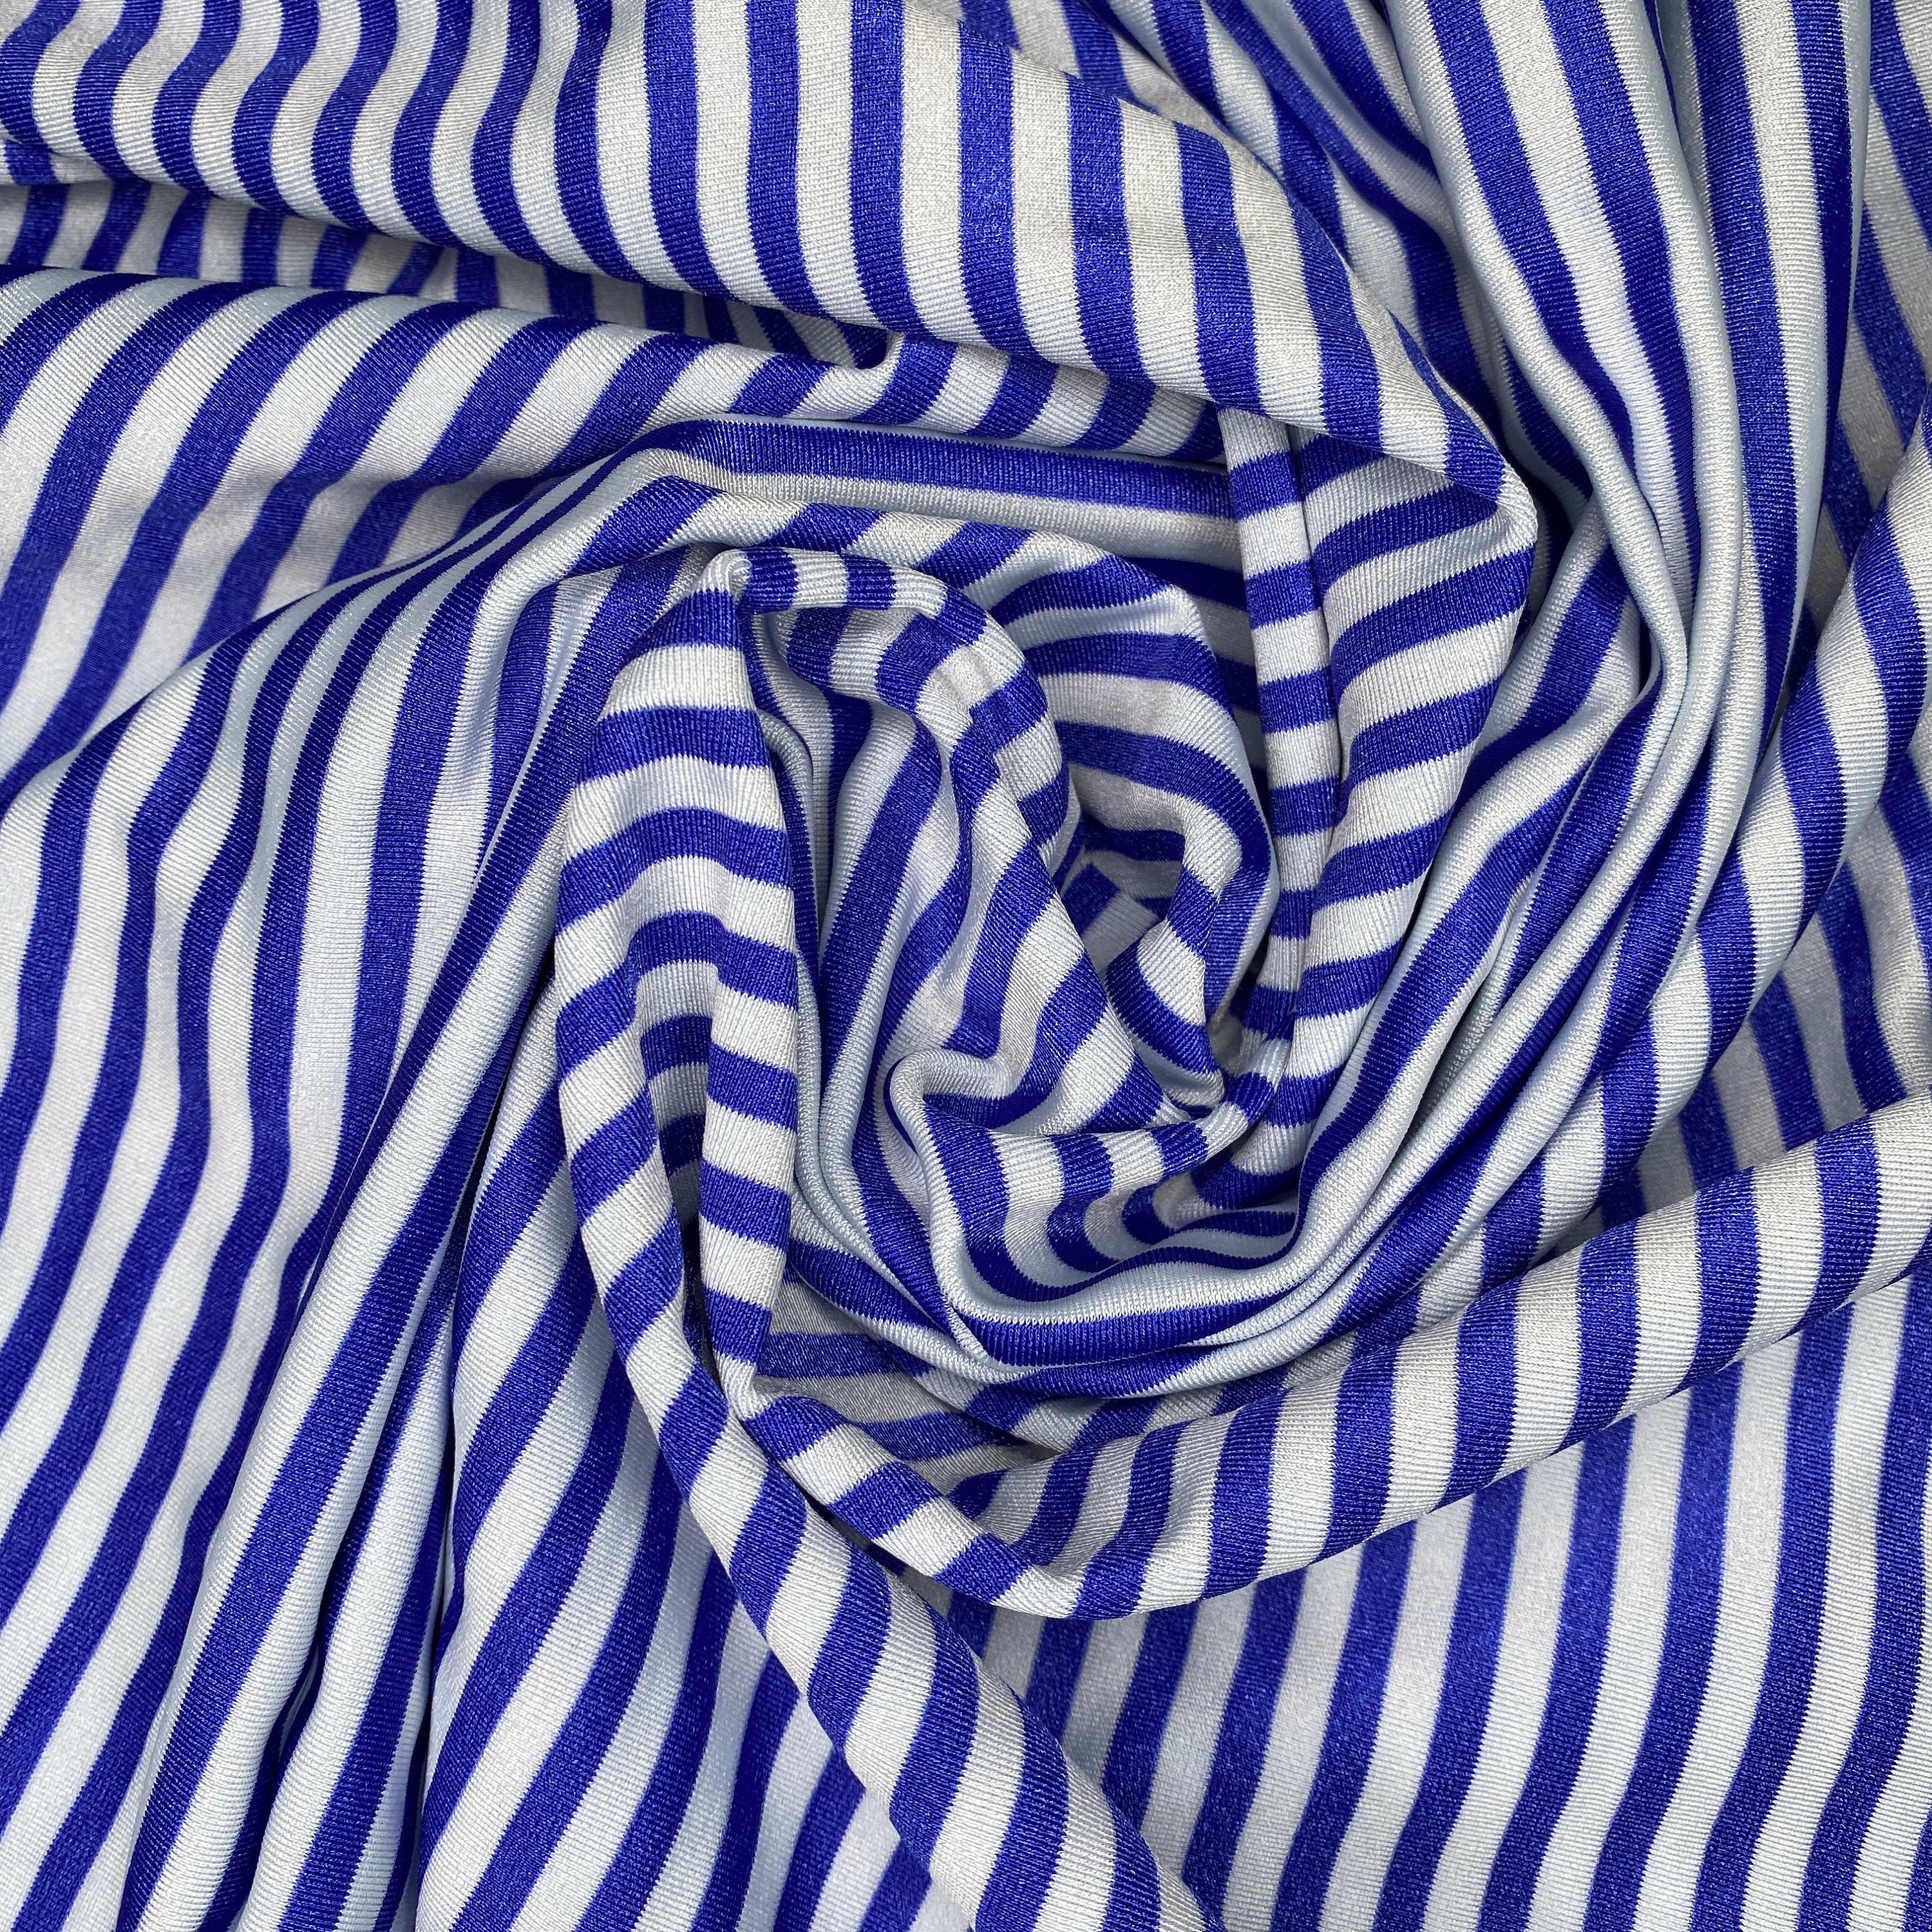 Striped Nylon Spandex - 63” - Blue/White